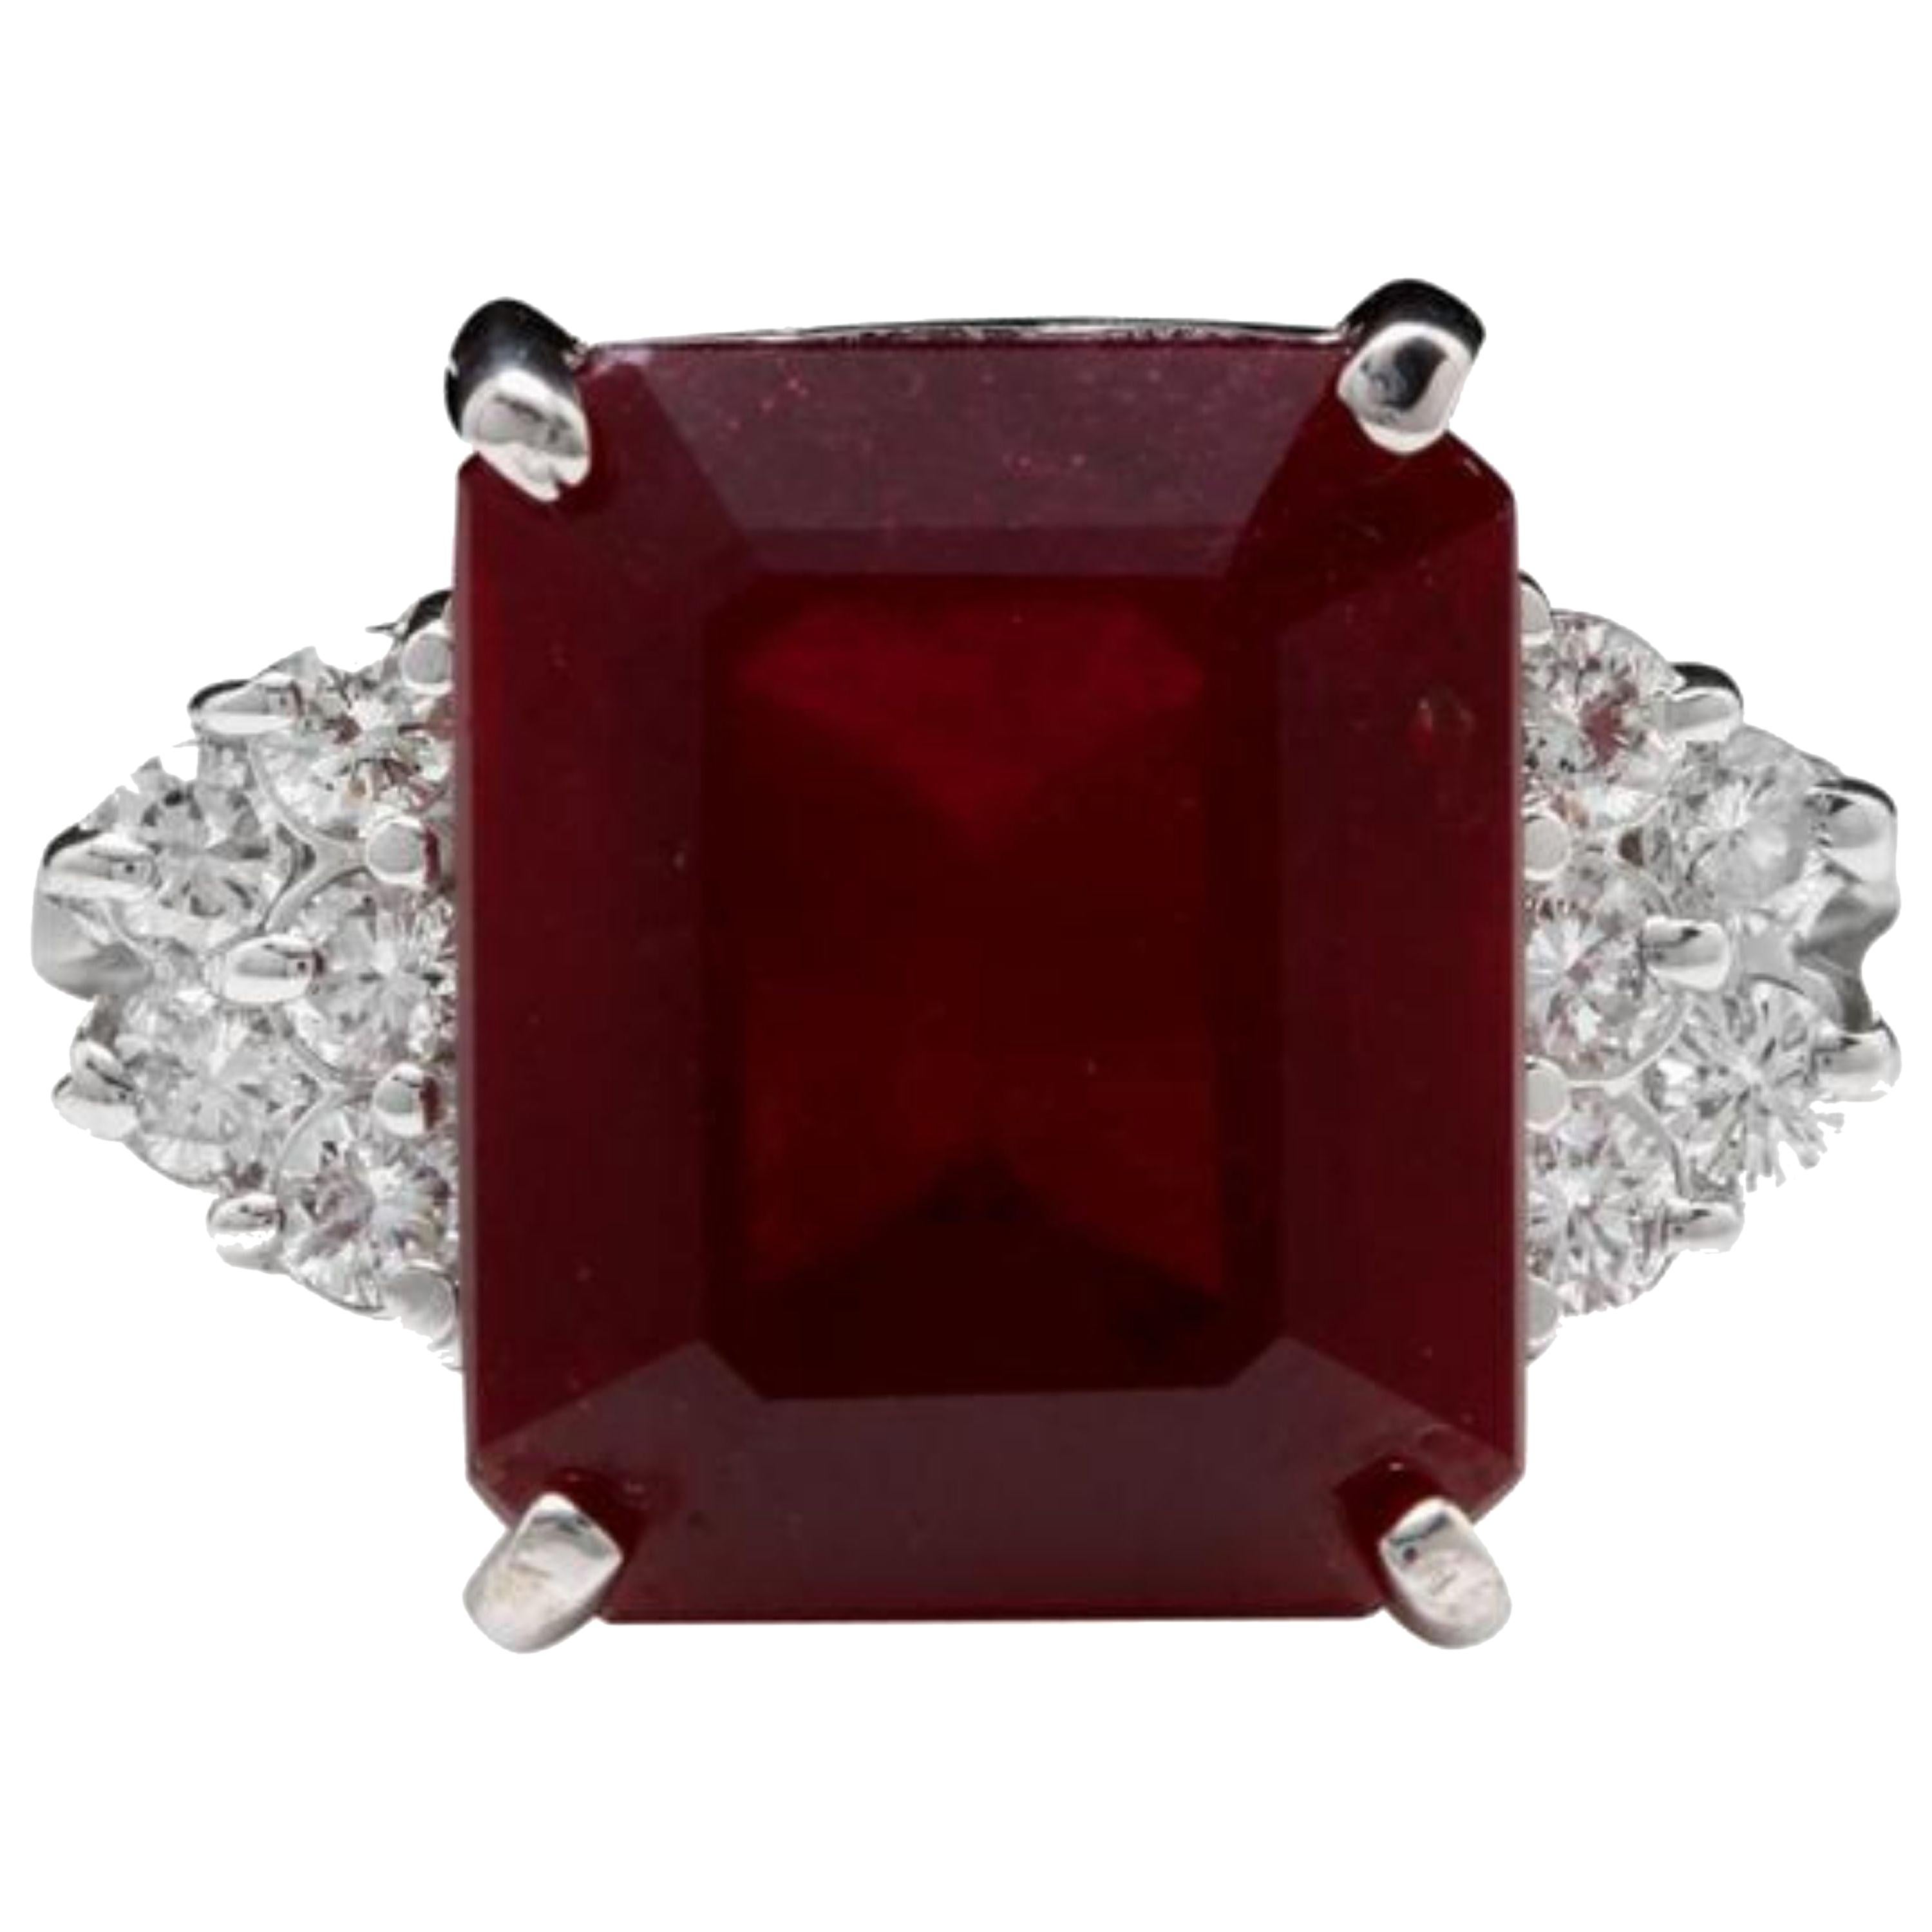 13.00 Carat Impressive Natural Red Ruby and Diamond 14 Karat White Gold Ring